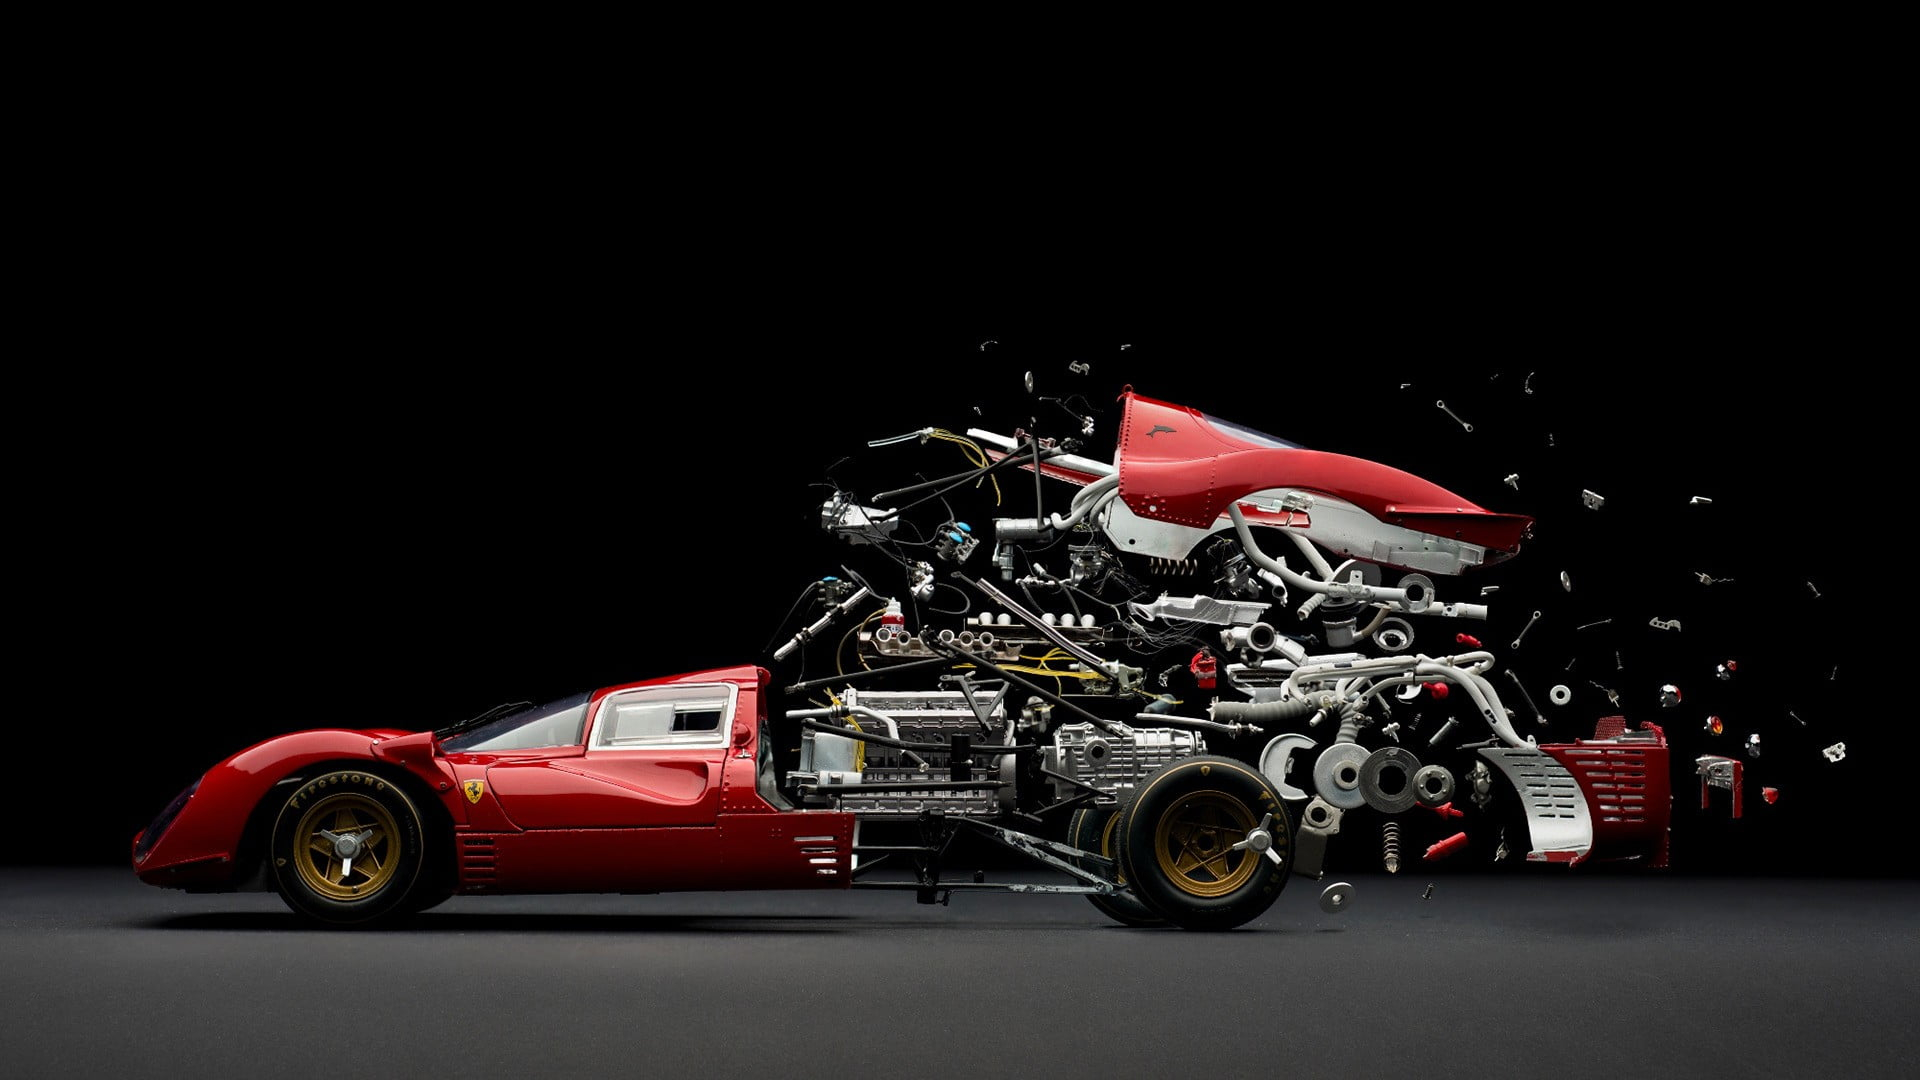 Red car, Ferrari, photo manipulation, engines, gears, motors wallpaper